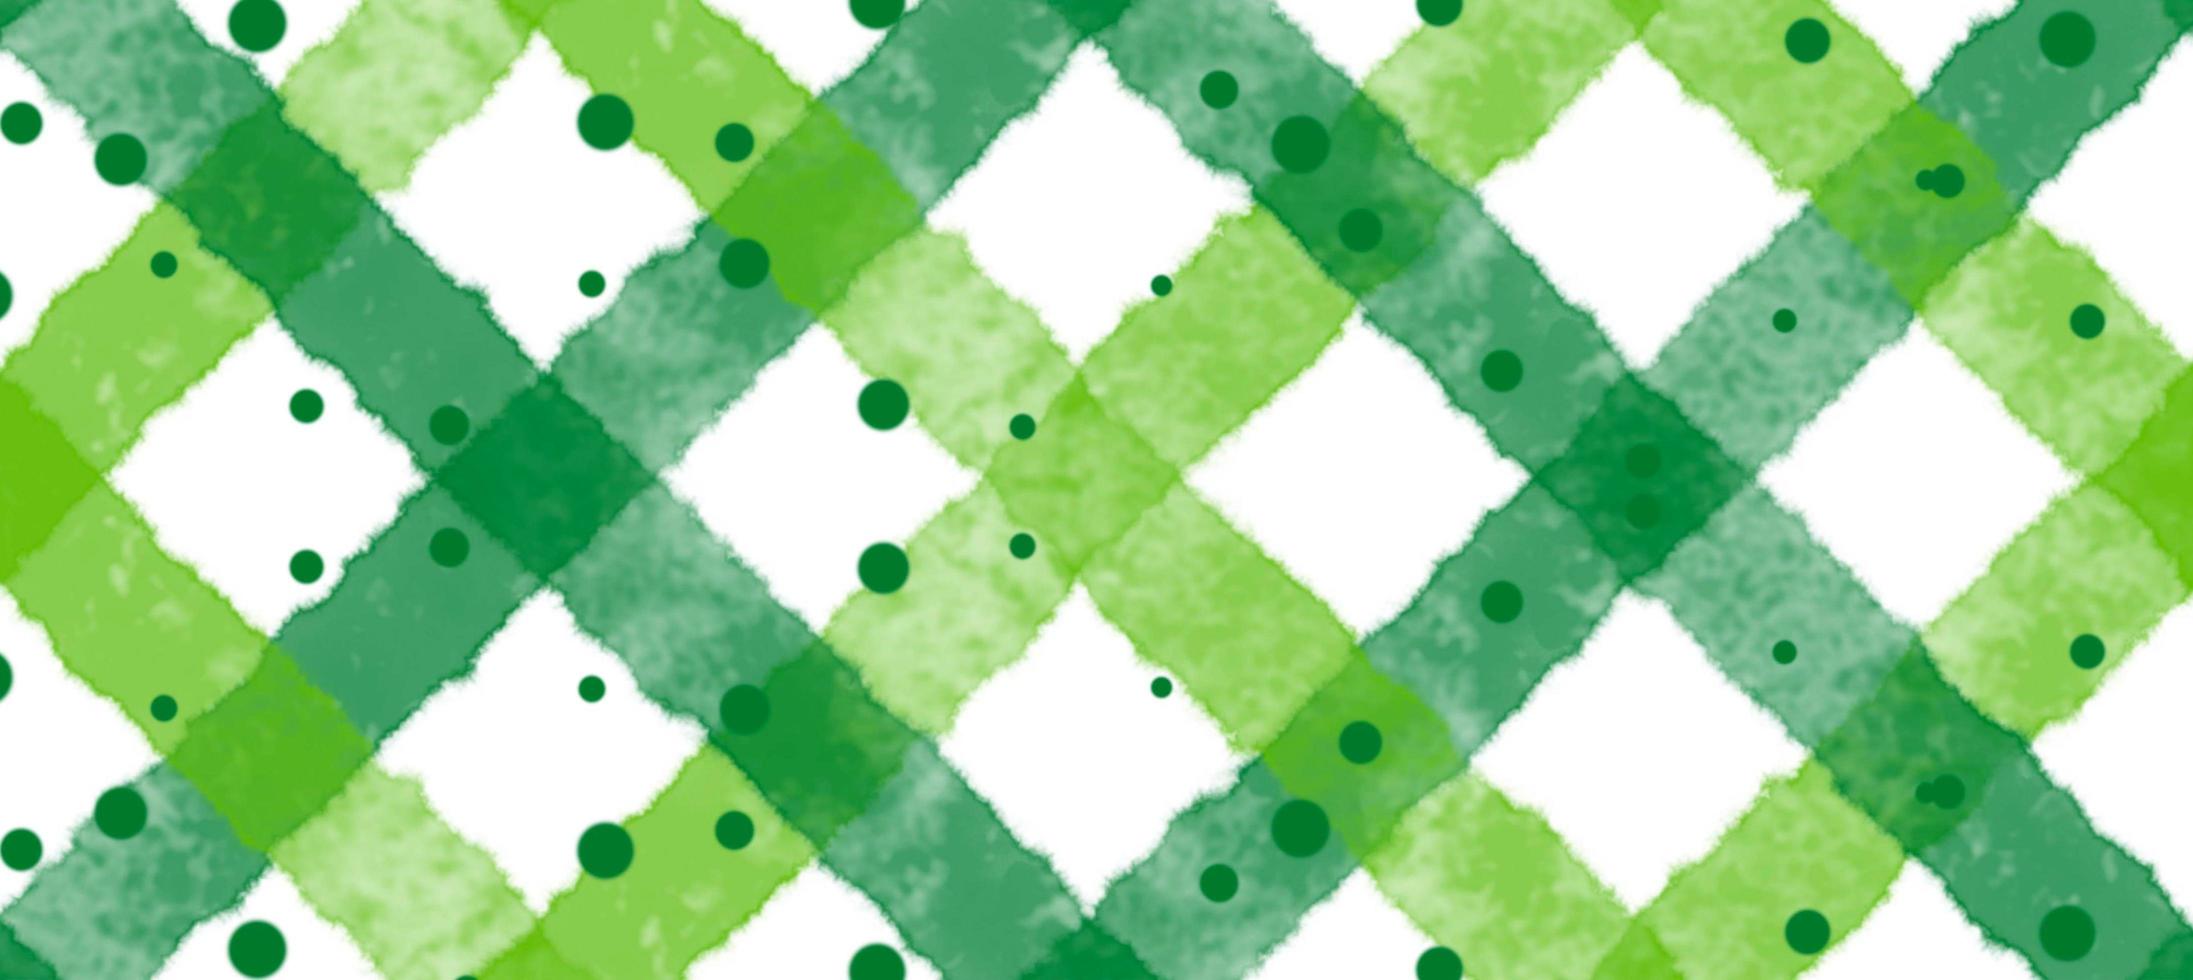 verde línea cruzada tira textura fondo pintura acuarela línea rayas patrón fondo foto